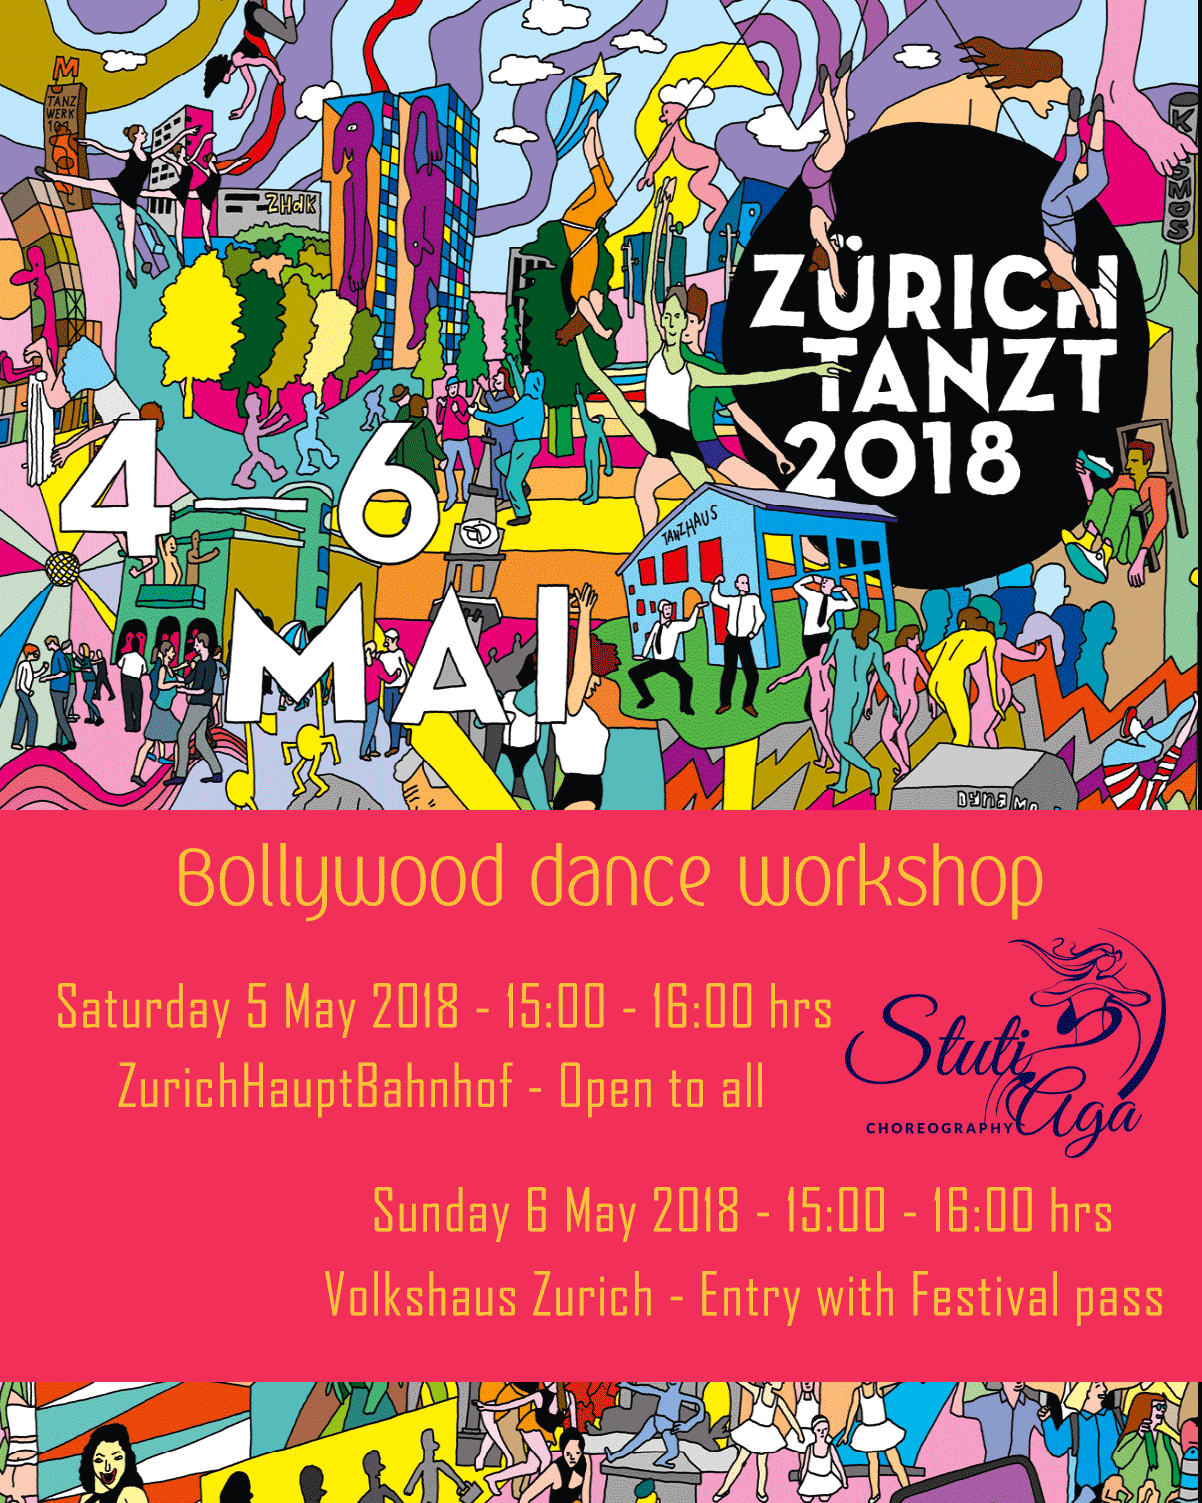 Zuerichtanzt 2019 Bollywood crashkurs with SADC Stuti Aga at Zürich HB